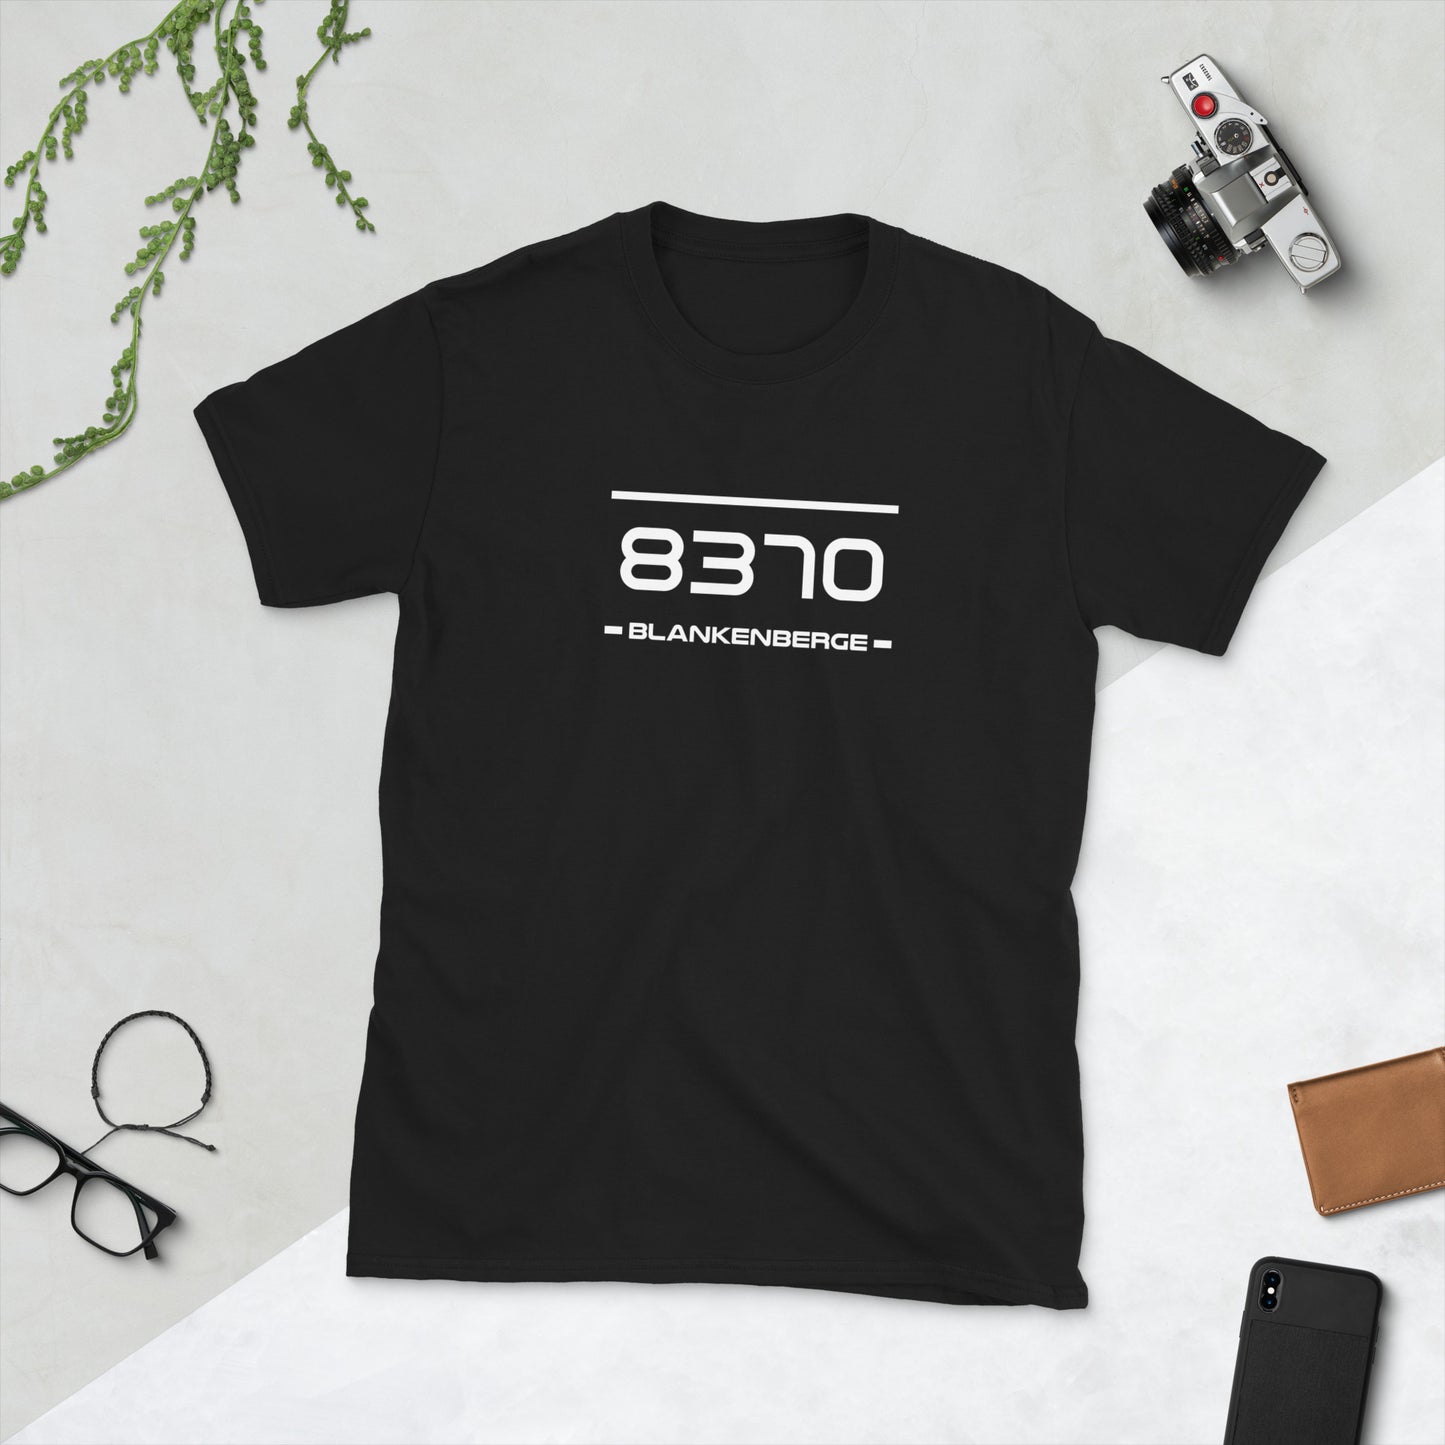 Tshirt - 8370 - Blankenberge